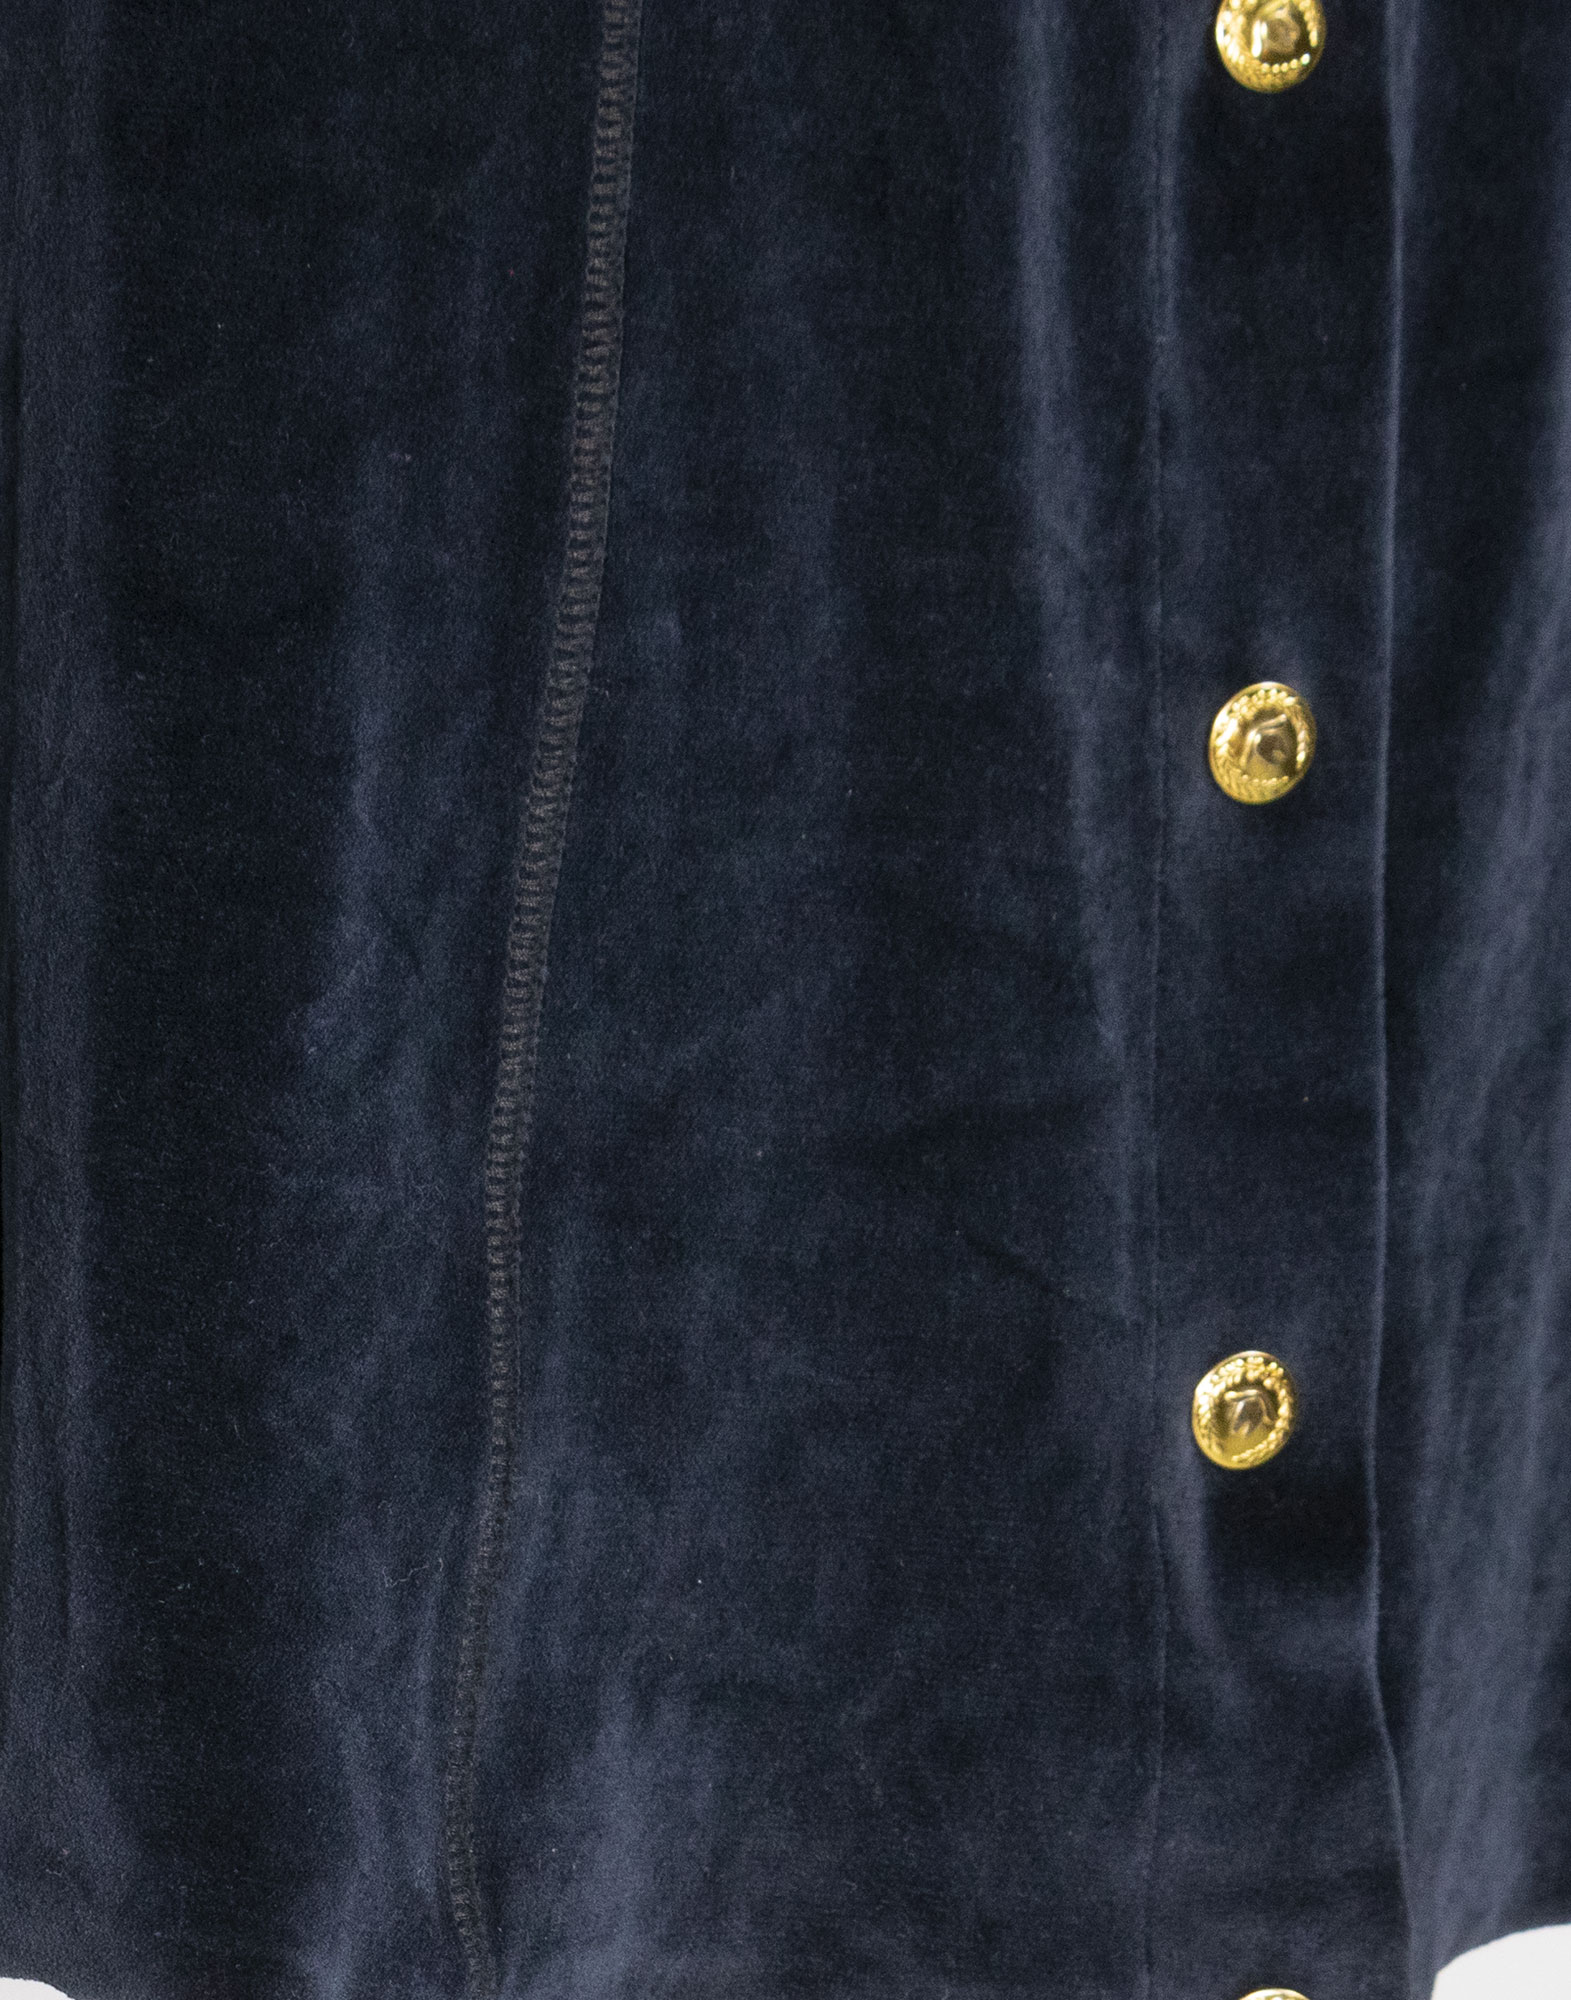 Moschino Jeans - 90s Dress